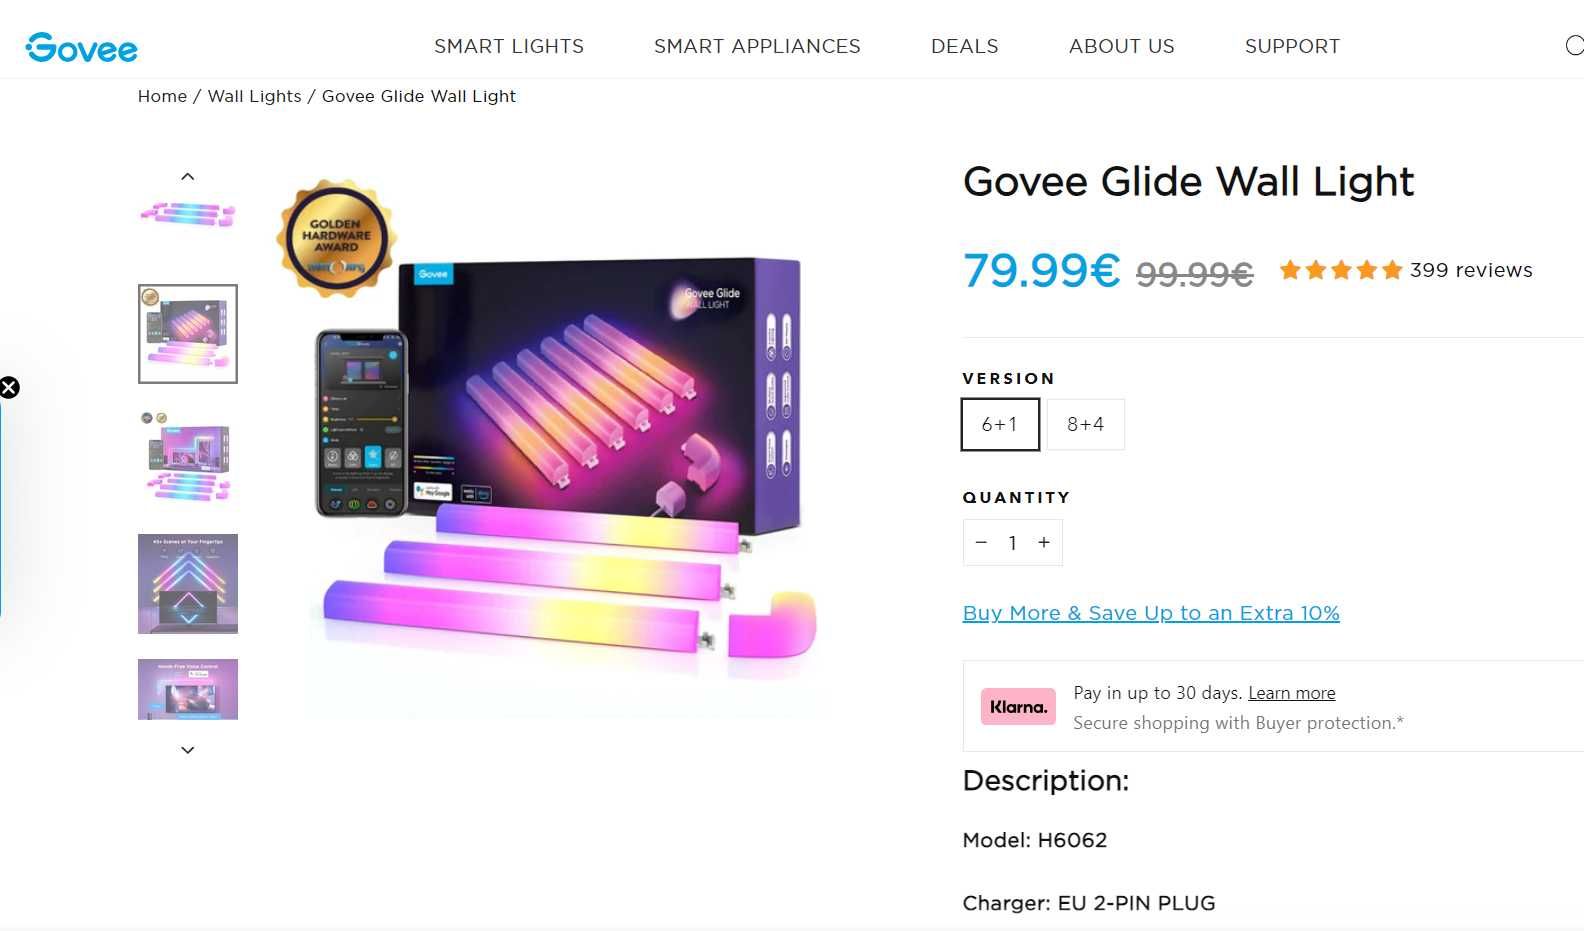 Govee Glide Wall Light